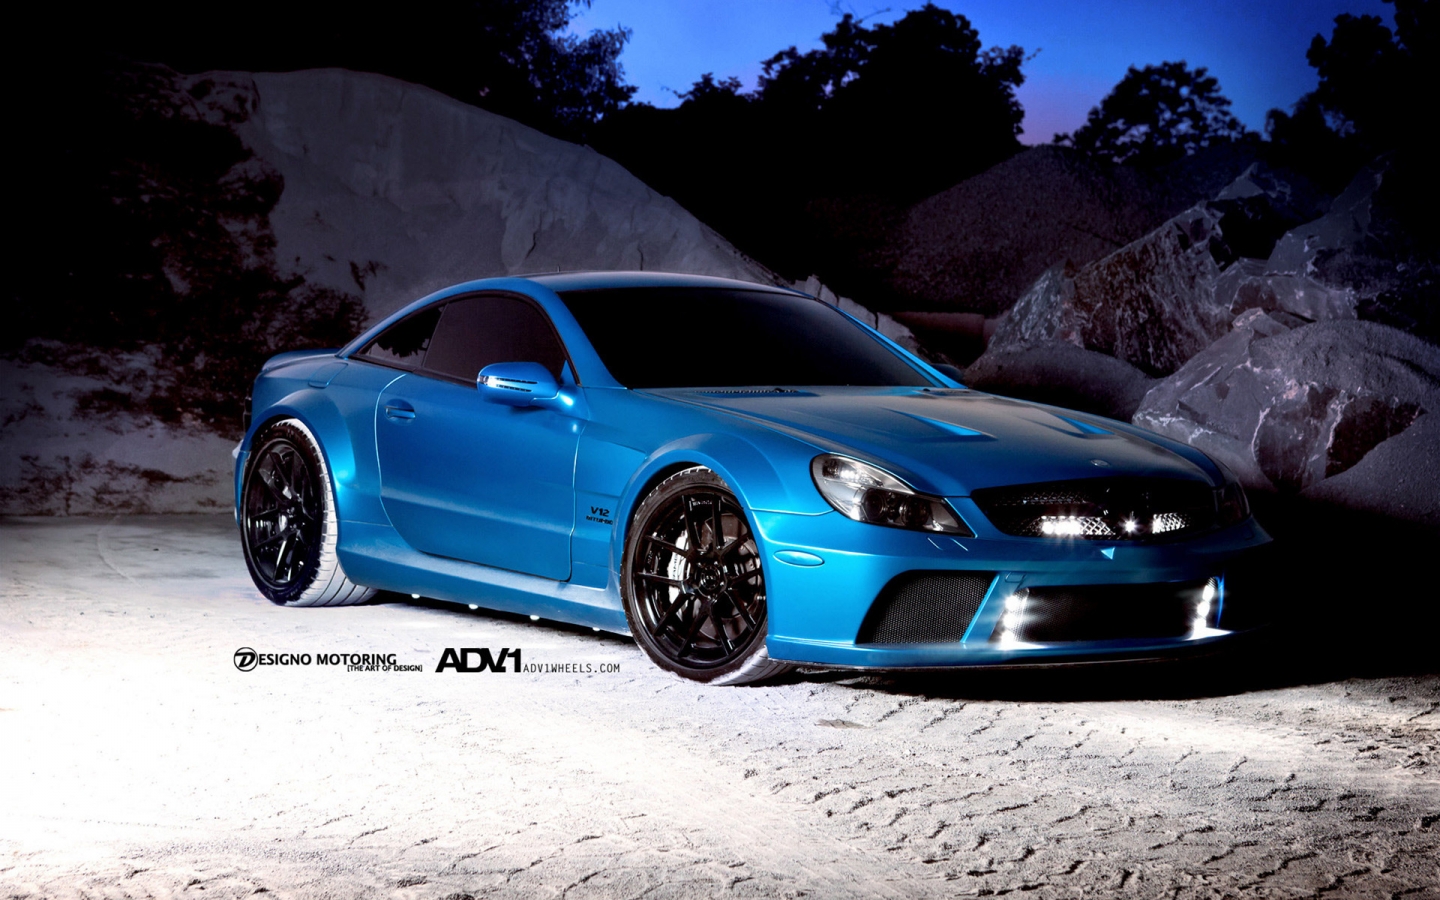 ADV Wheels Mercedes SL65 AMG for 1440 x 900 widescreen resolution